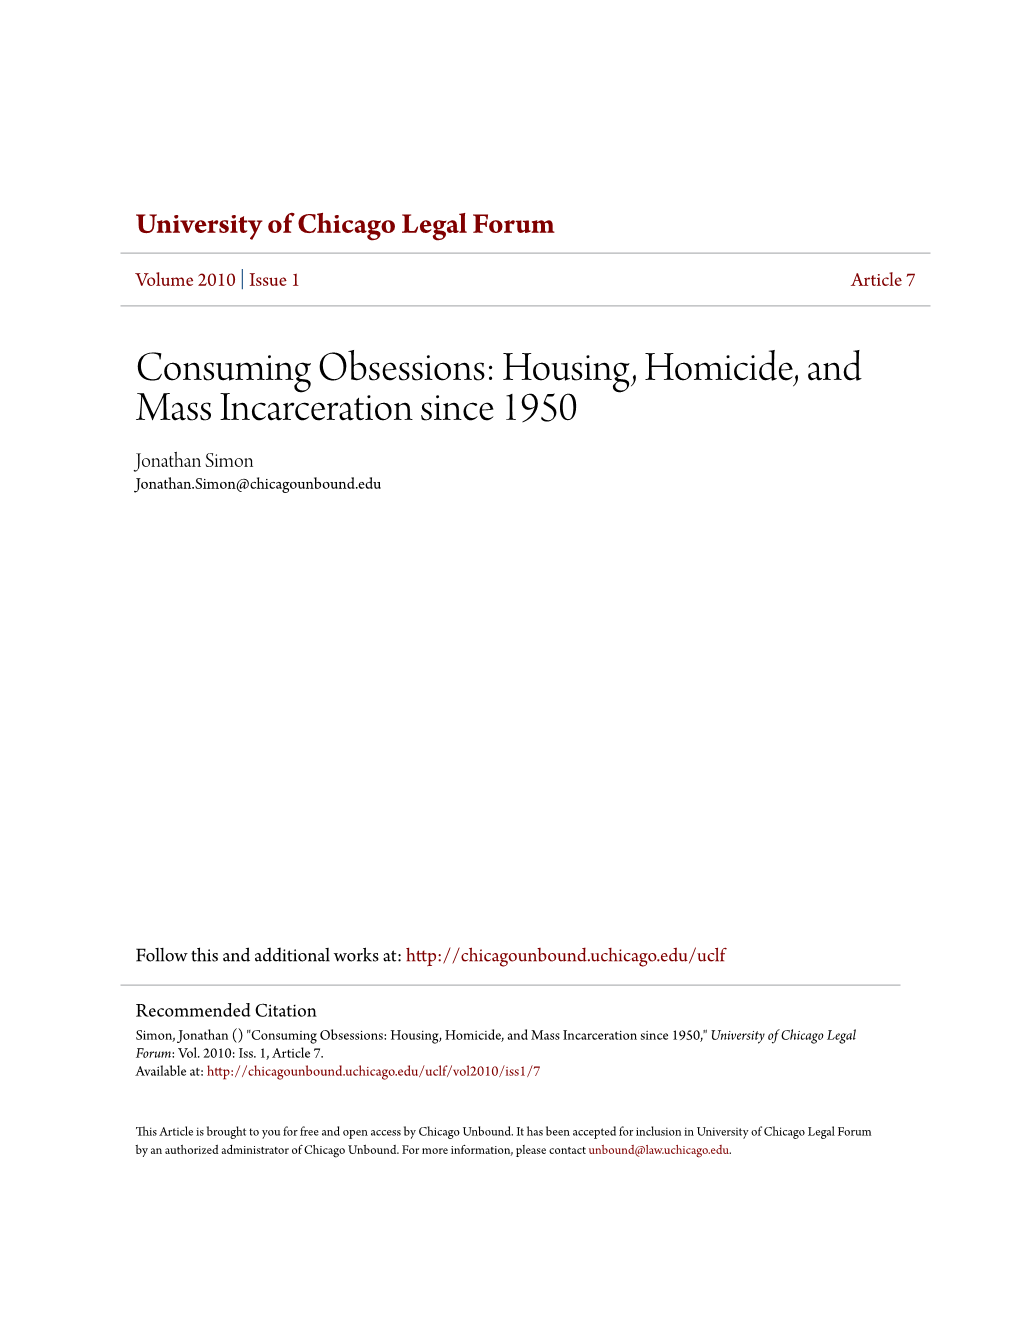 Housing, Homicide, and Mass Incarceration Since 1950 Jonathan Simon Jonathan.Simon@Chicagounbound.Edu